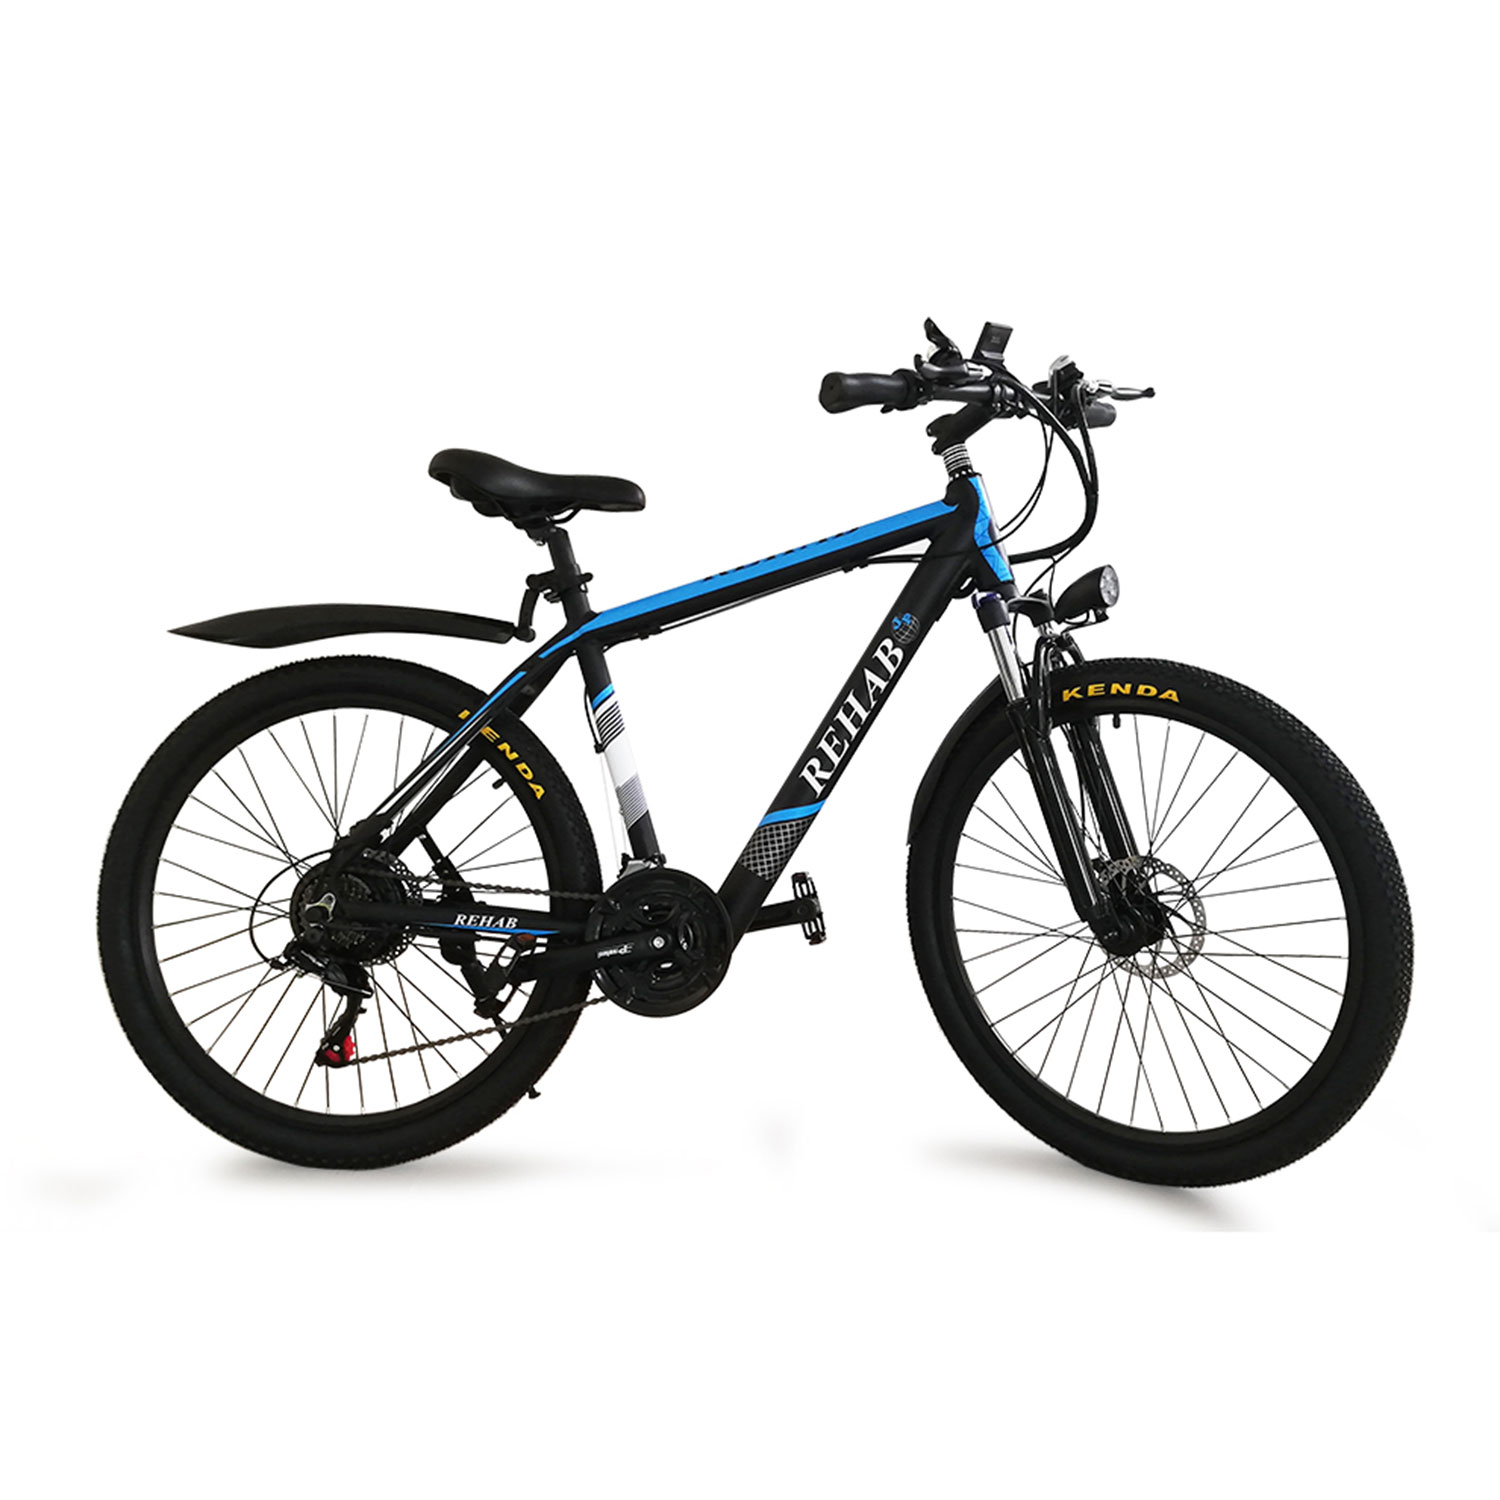 https://www.jprehab.com/assets/uploads/ec_products/bicicleta-electrica-de-aluminio-modelo-yk-eb200-color-negro-azul-jp-rehab.jpg